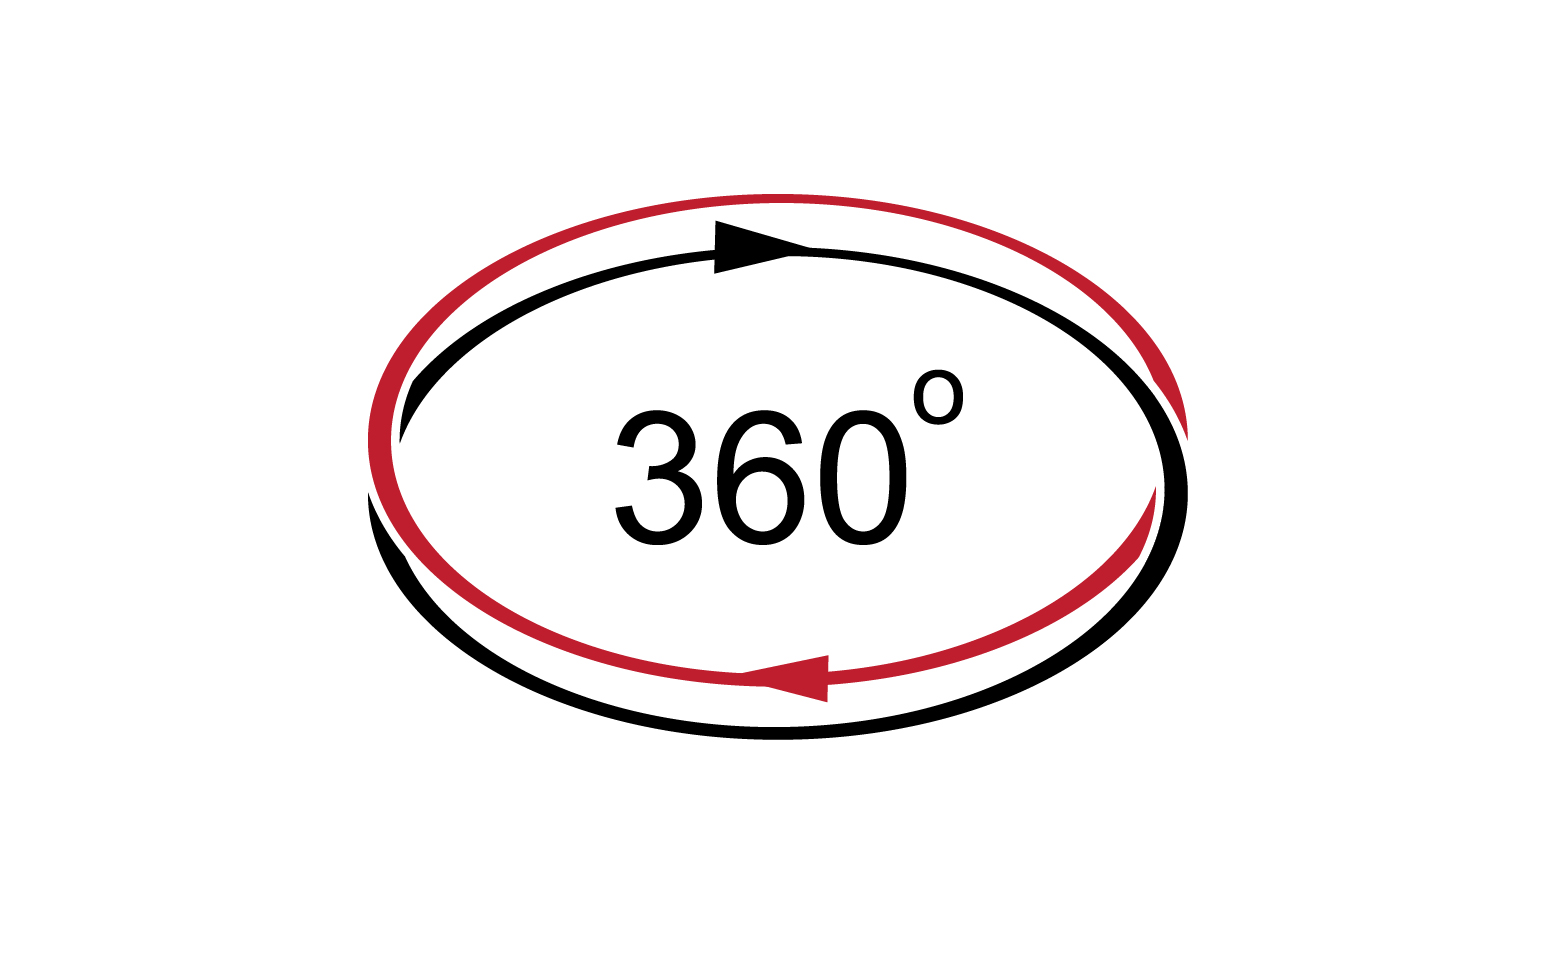 360 degree angle rotation icon symbol logo version v20